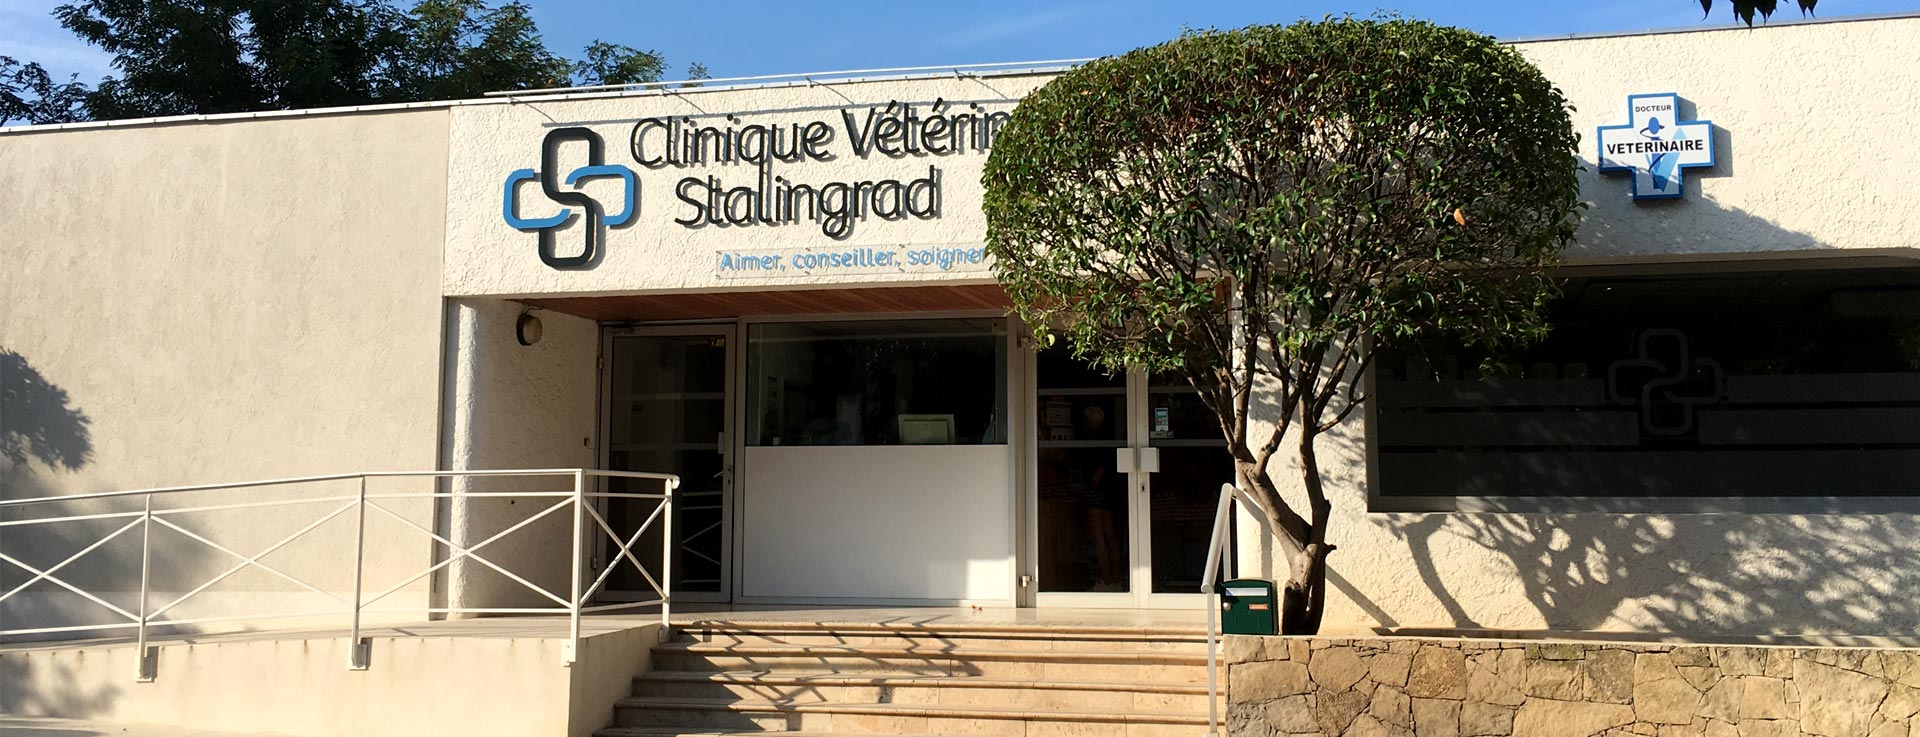 facade clinique vétérinaire stalingrad